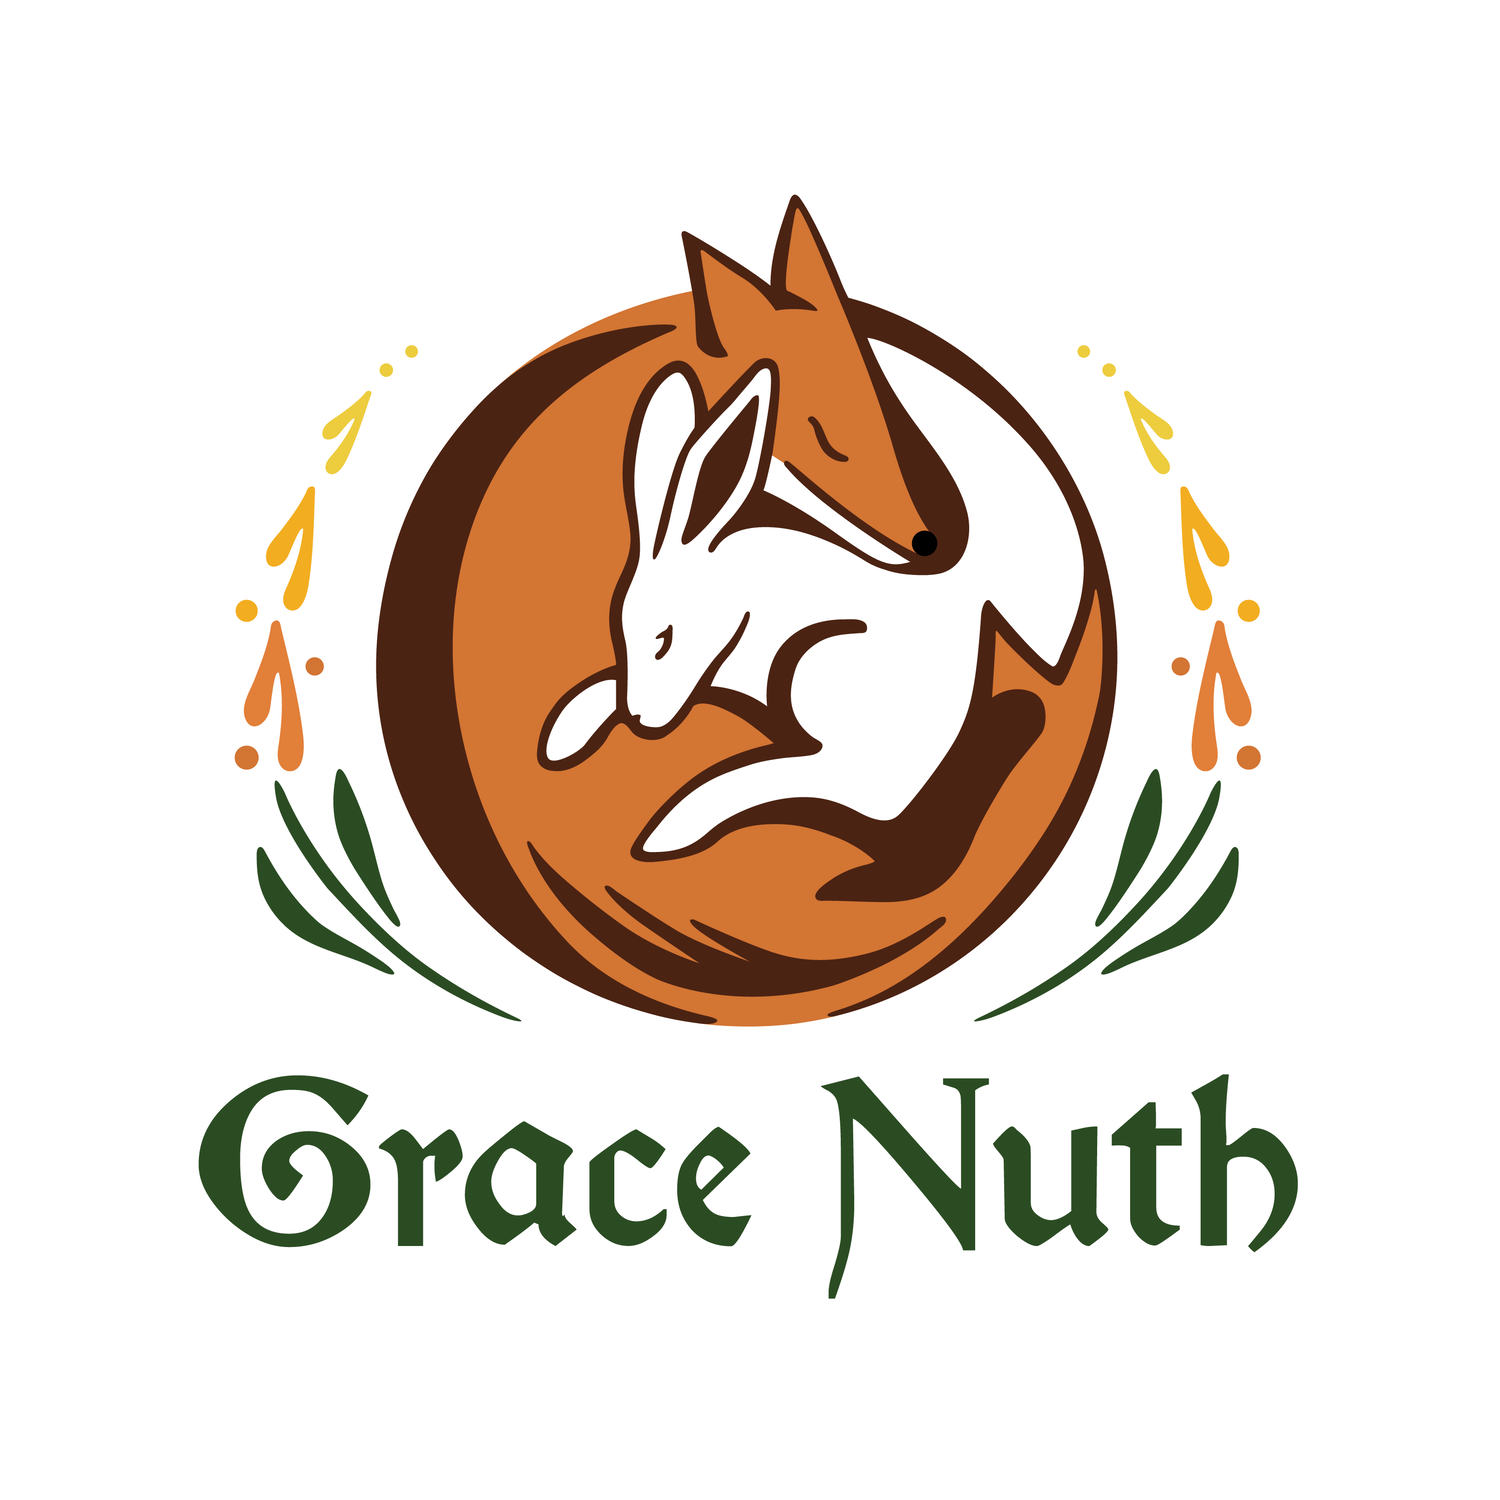 Grace Nuth